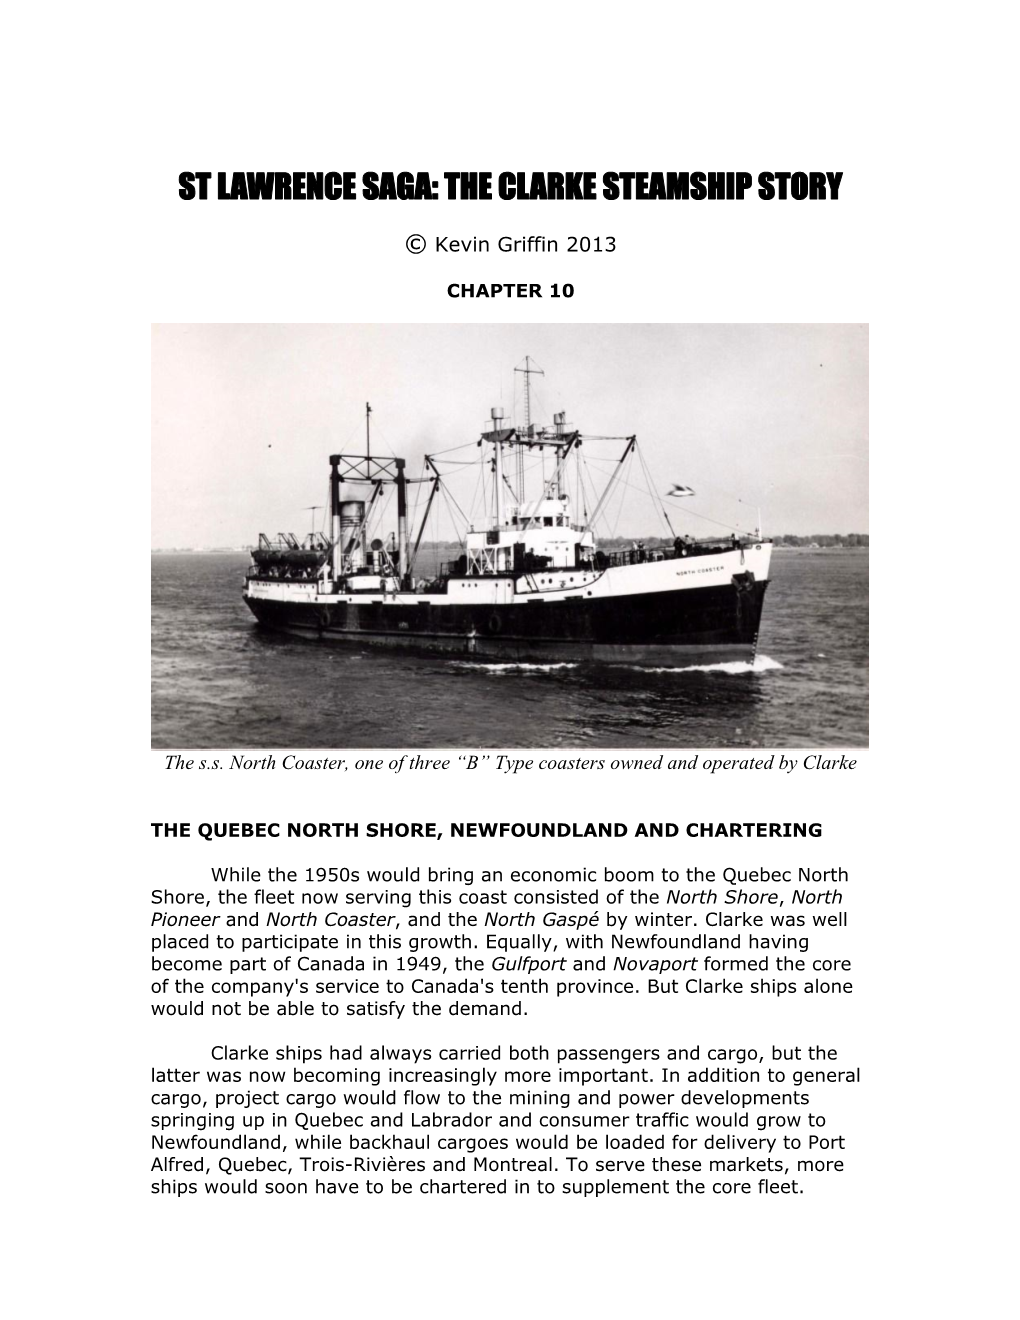 St Lawrence Saga: the Clarke Steamship Story